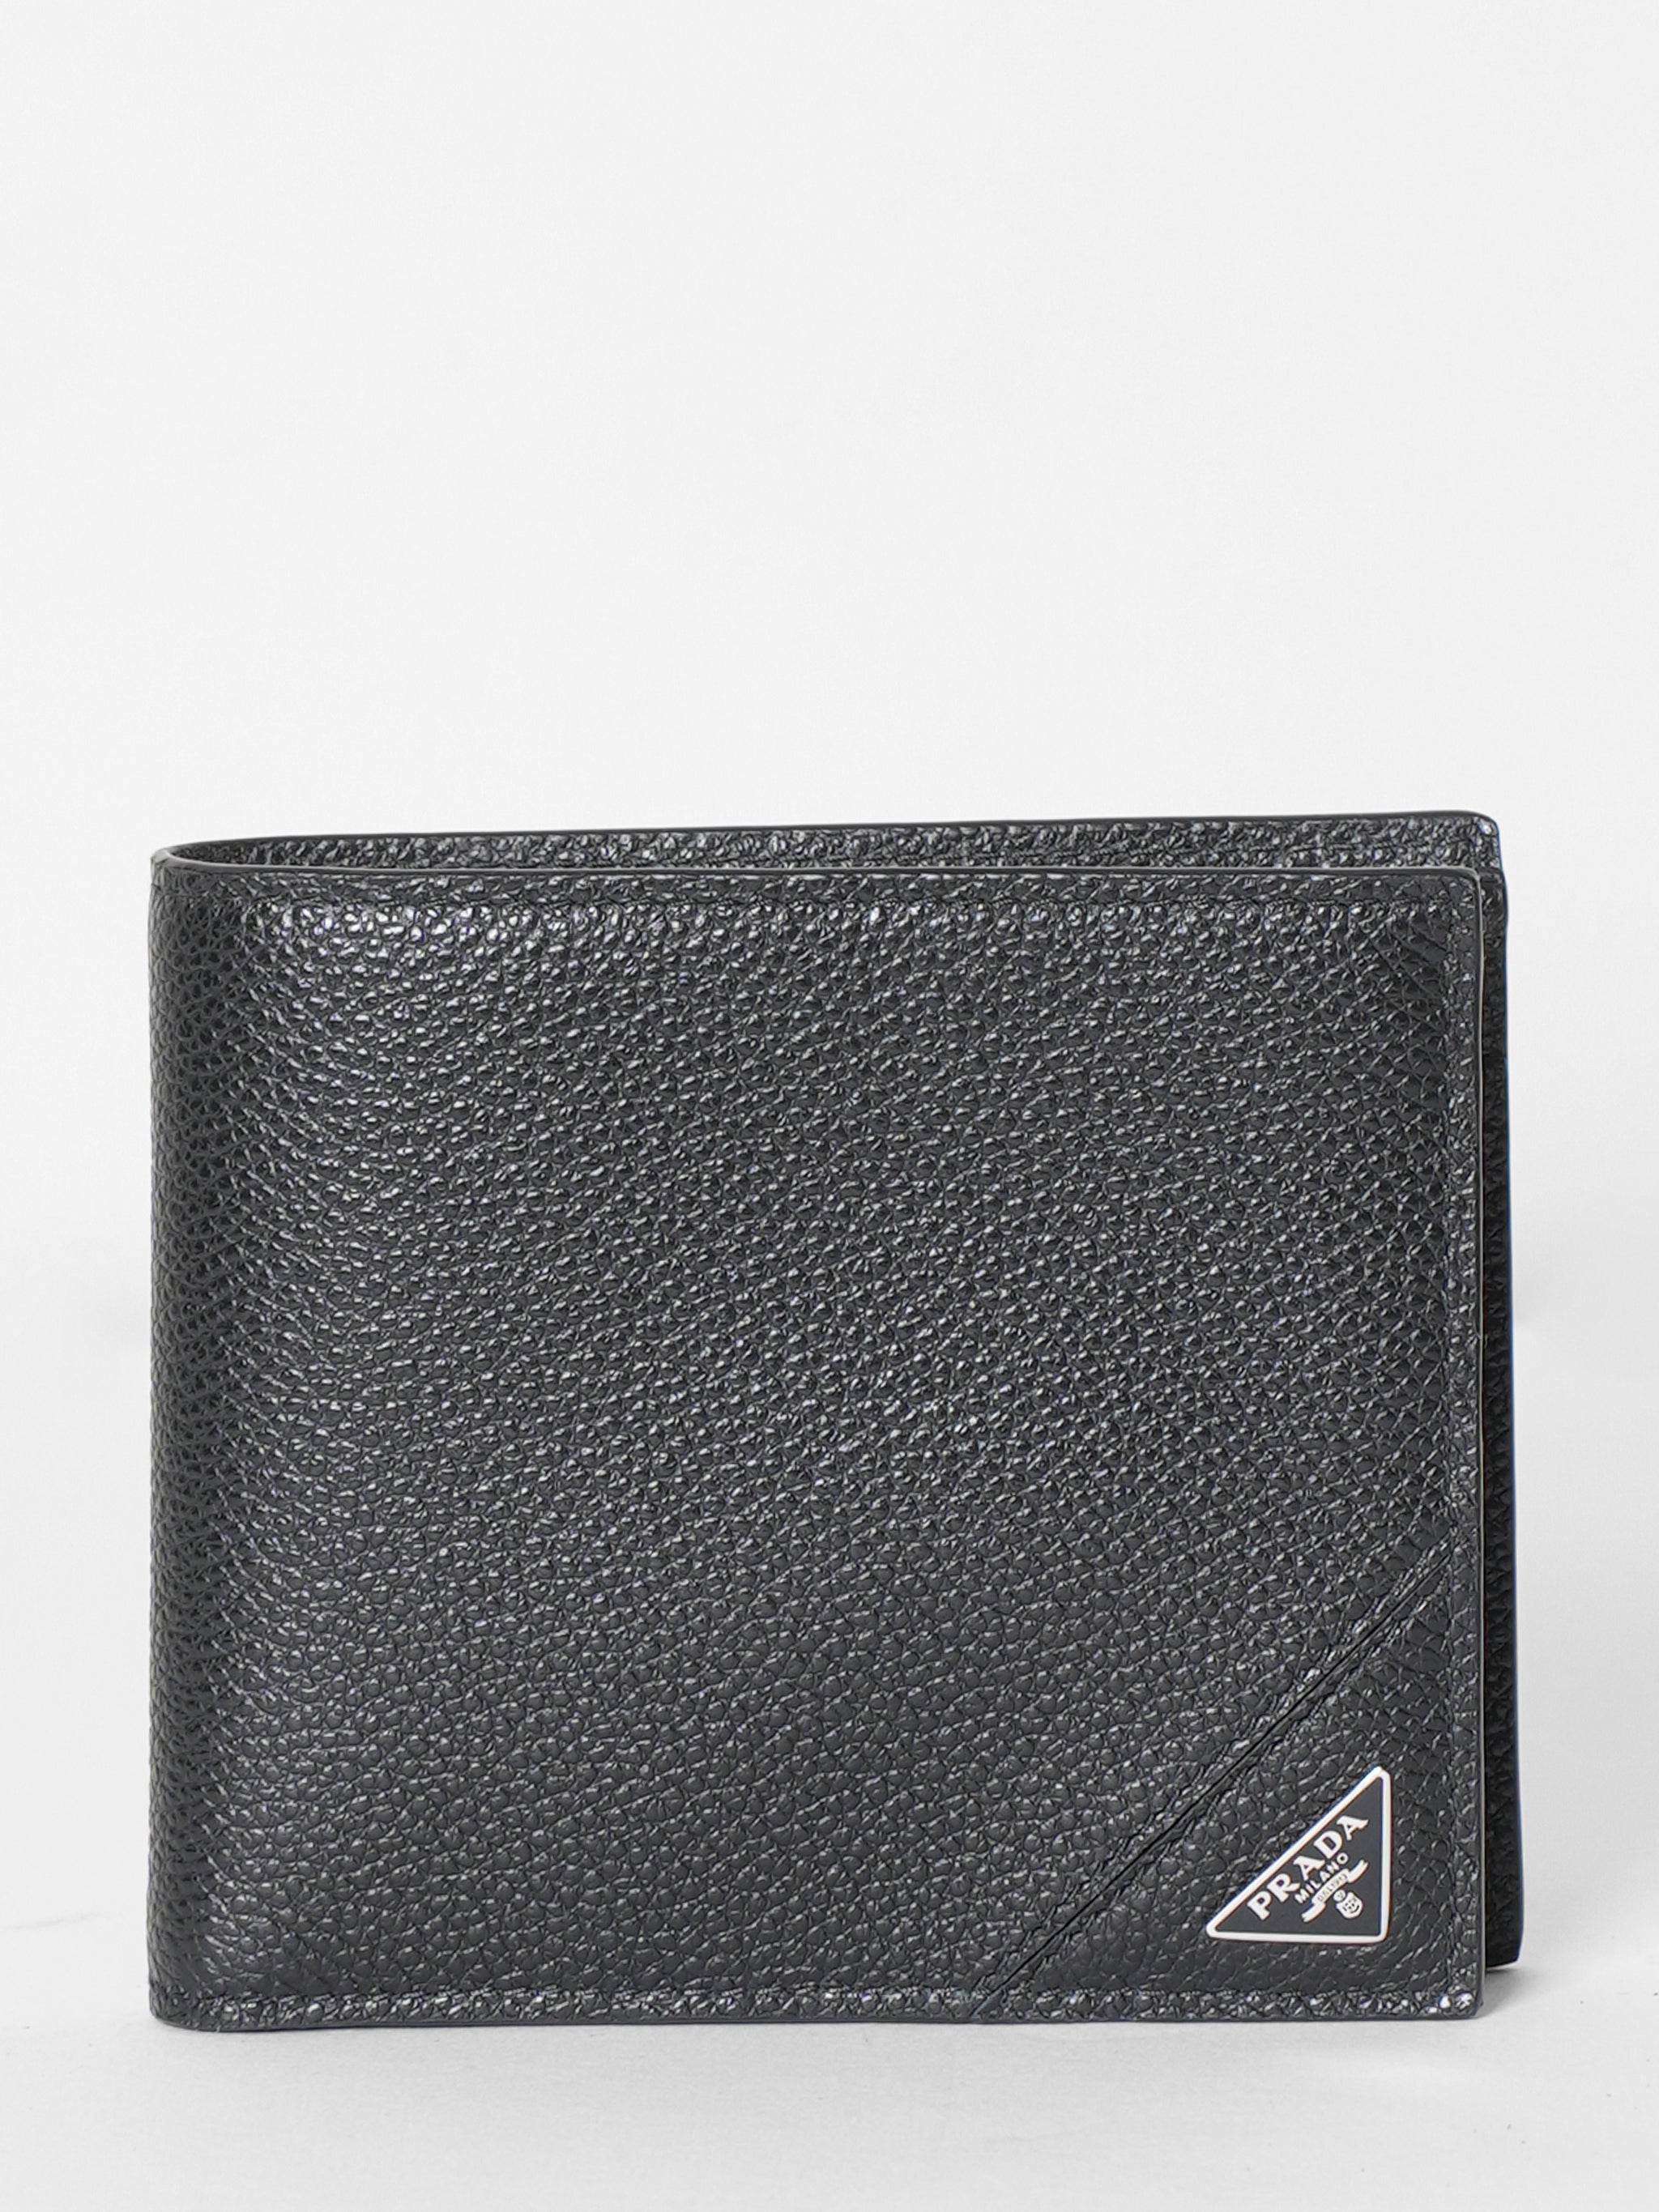 New Prada Saffiano Leather Wallet